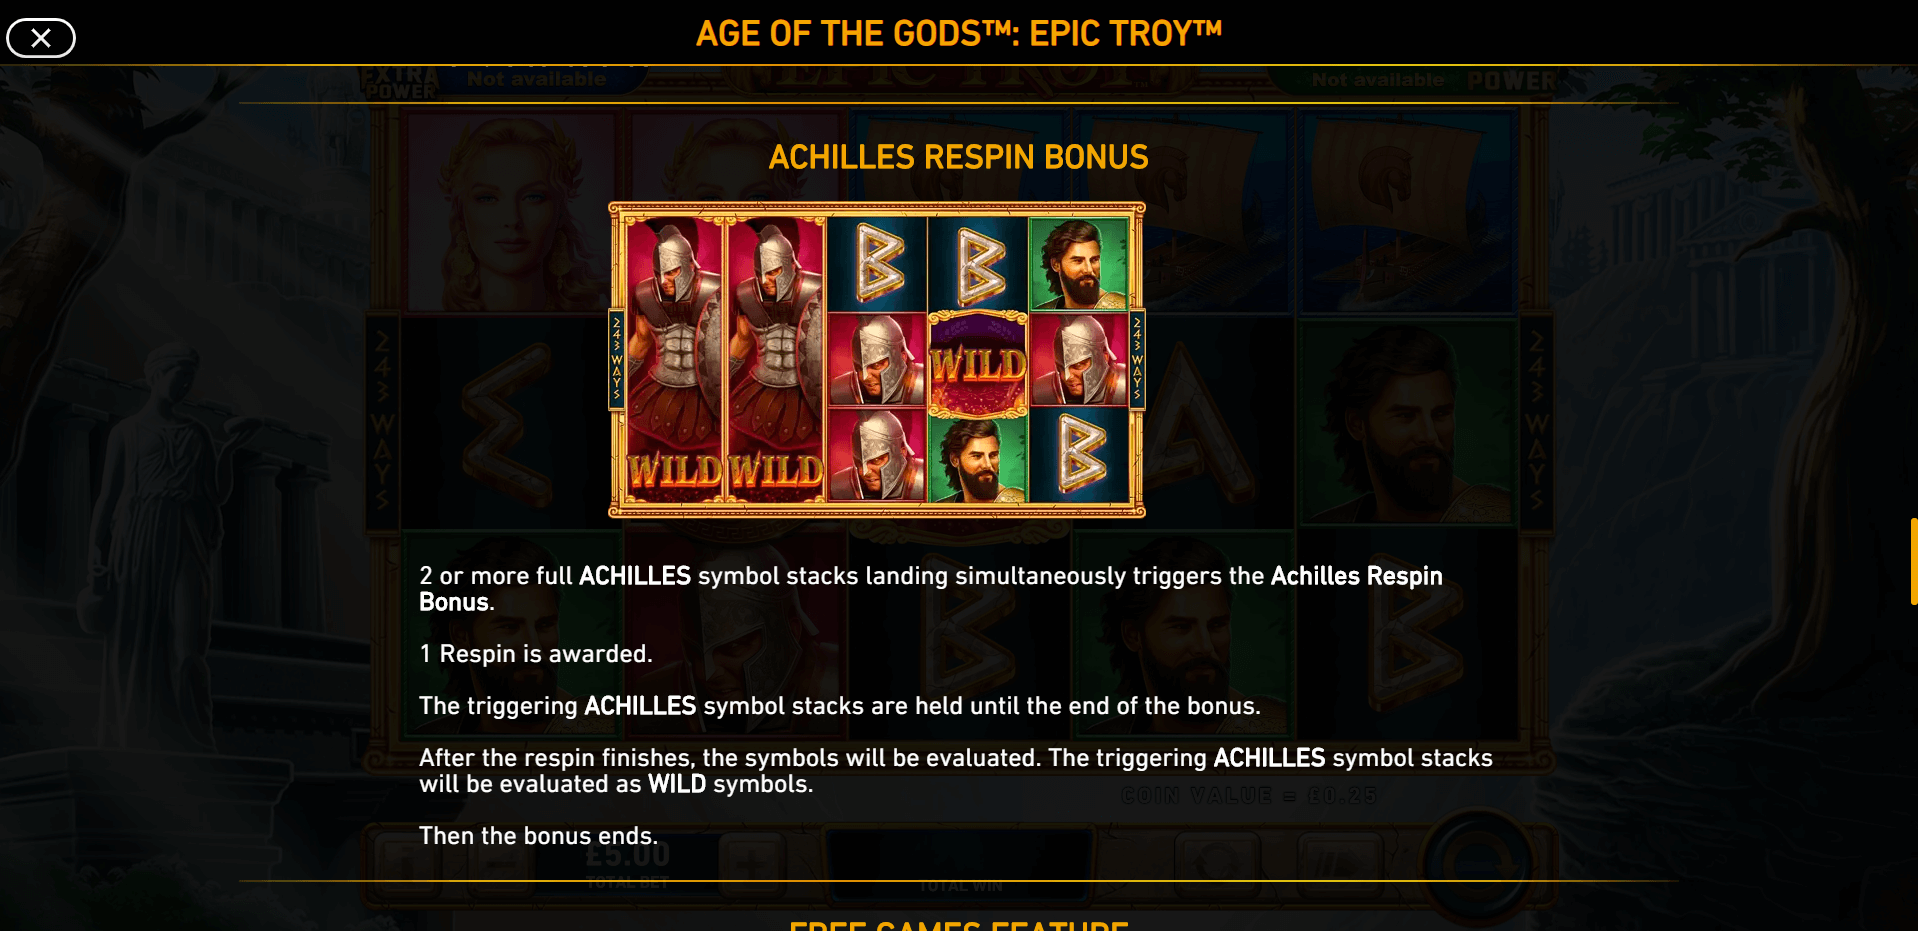 age of the gods epic troy slot machine detail image 6